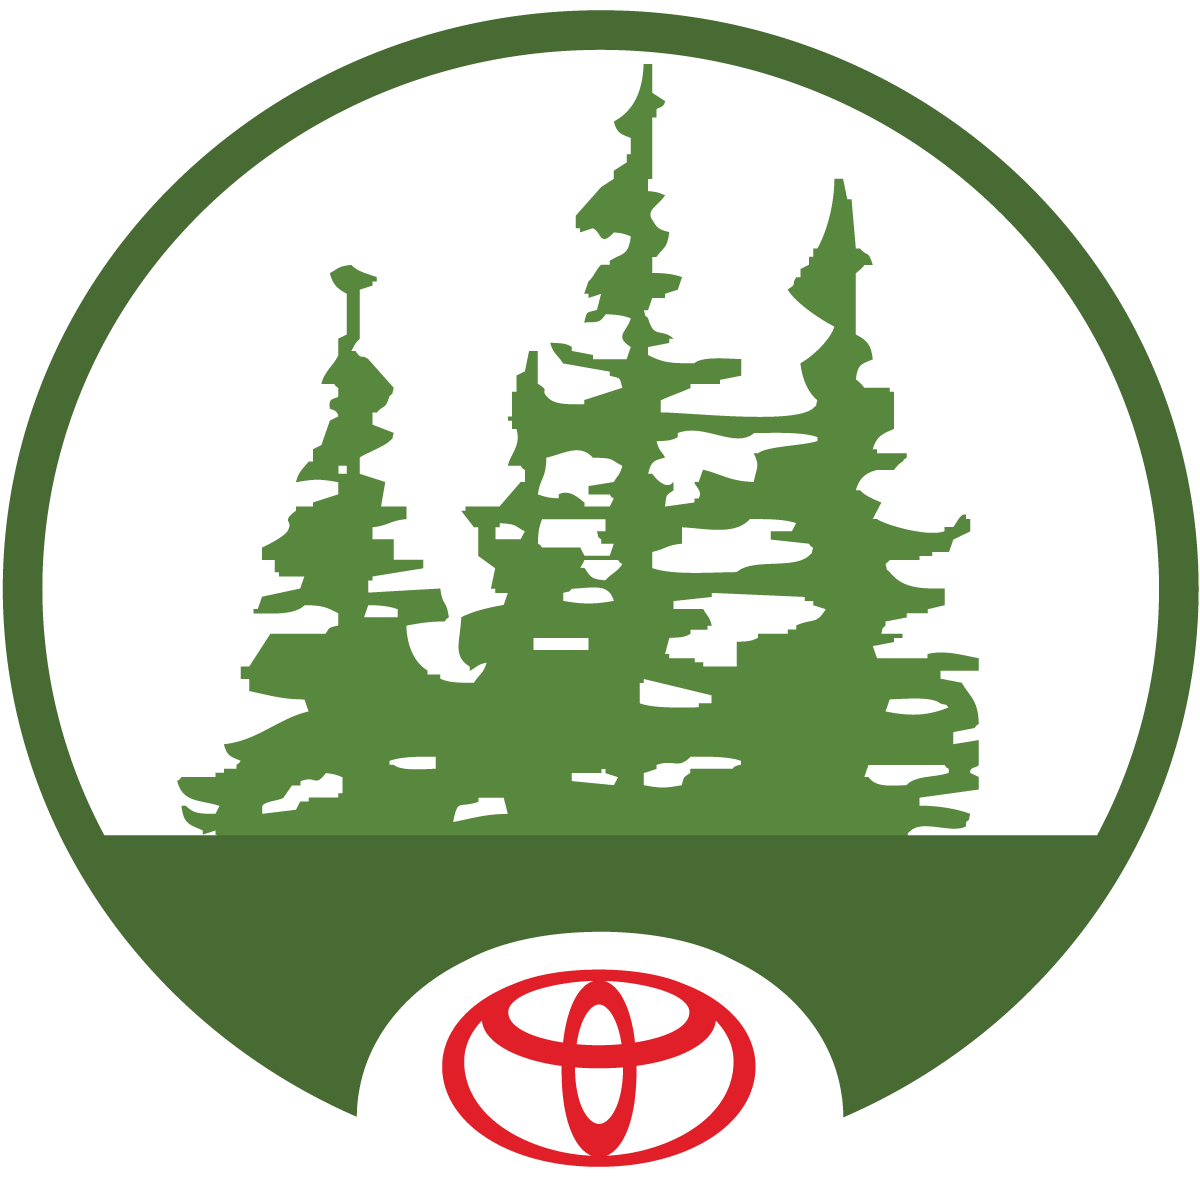 Beaverton Toyota: Experience CLEAR